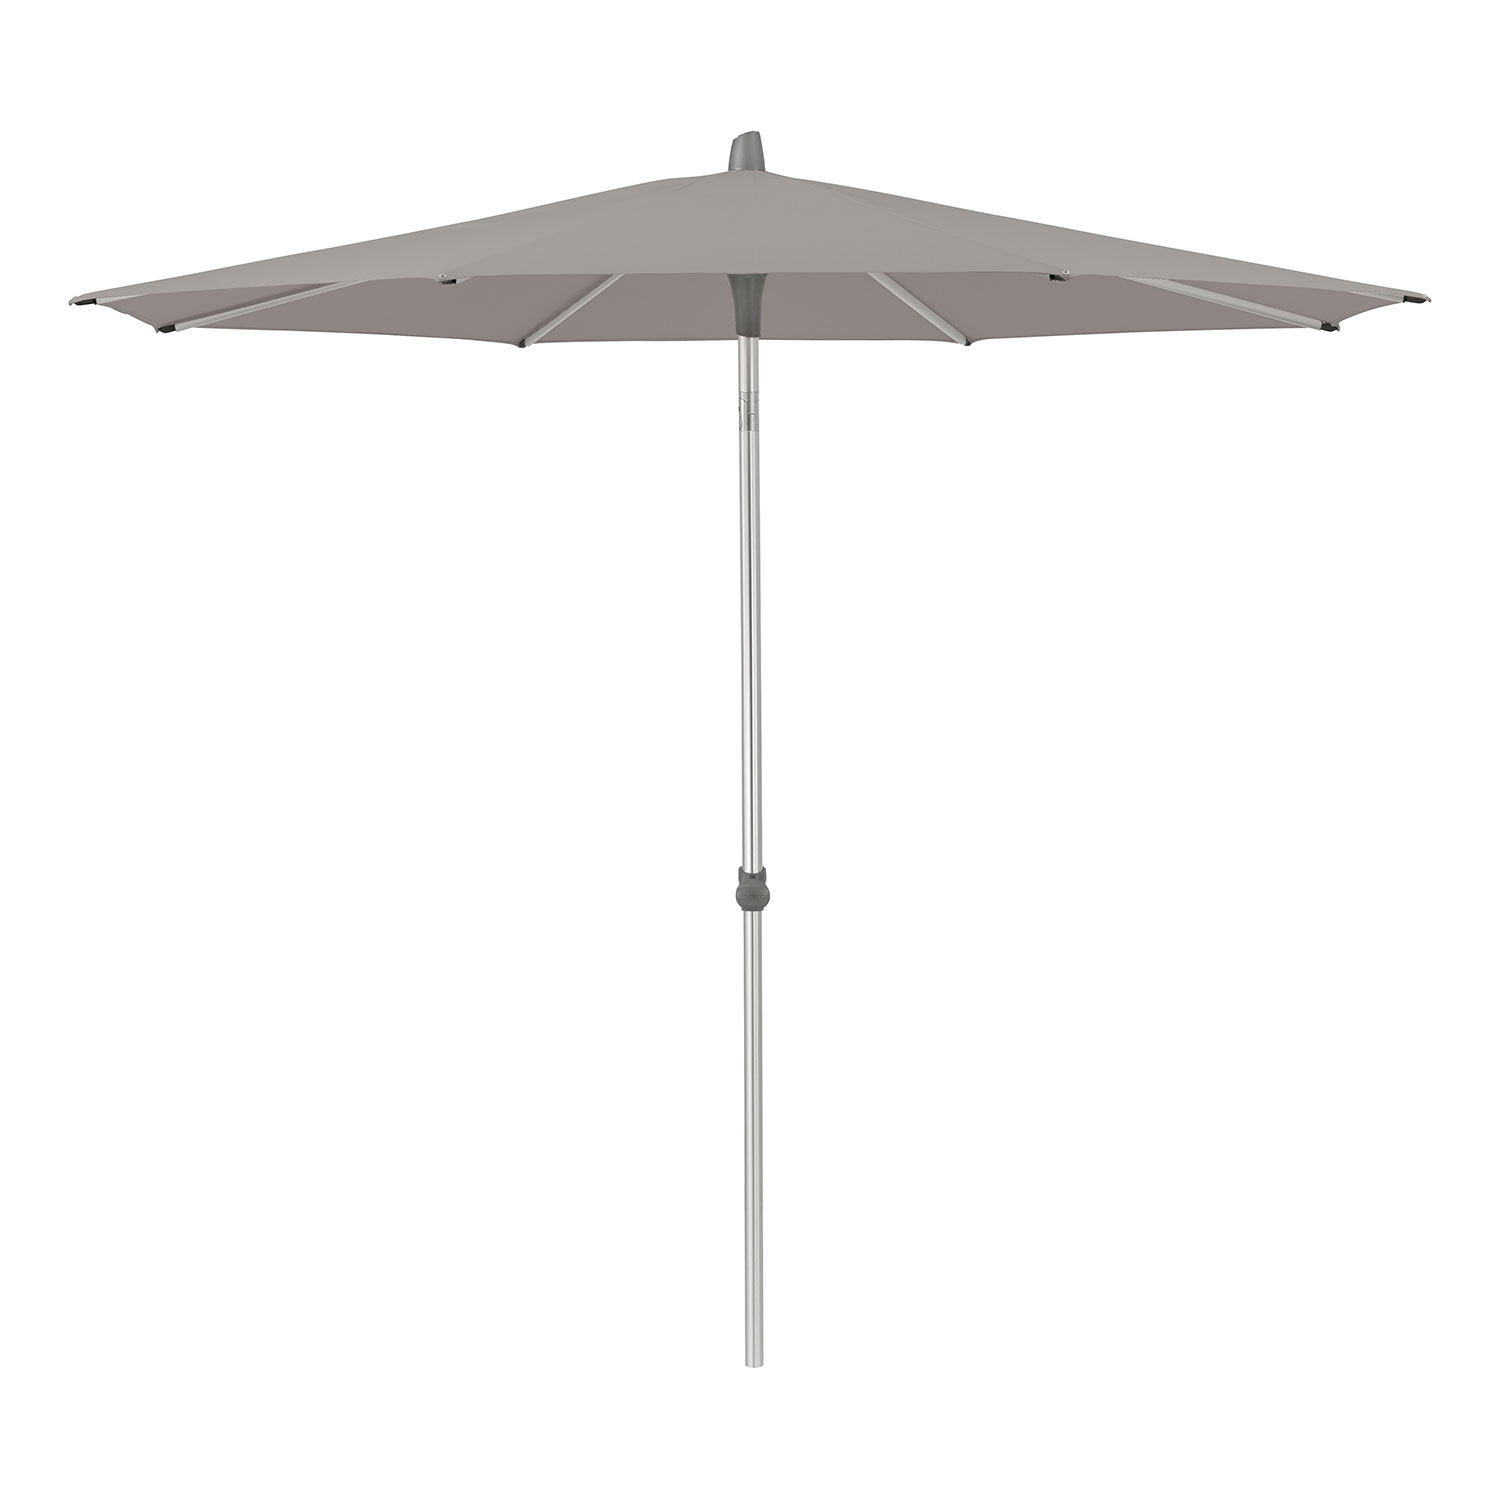 Glatz Alu-smart parasoll 250 cm kat.5 686 urban clay